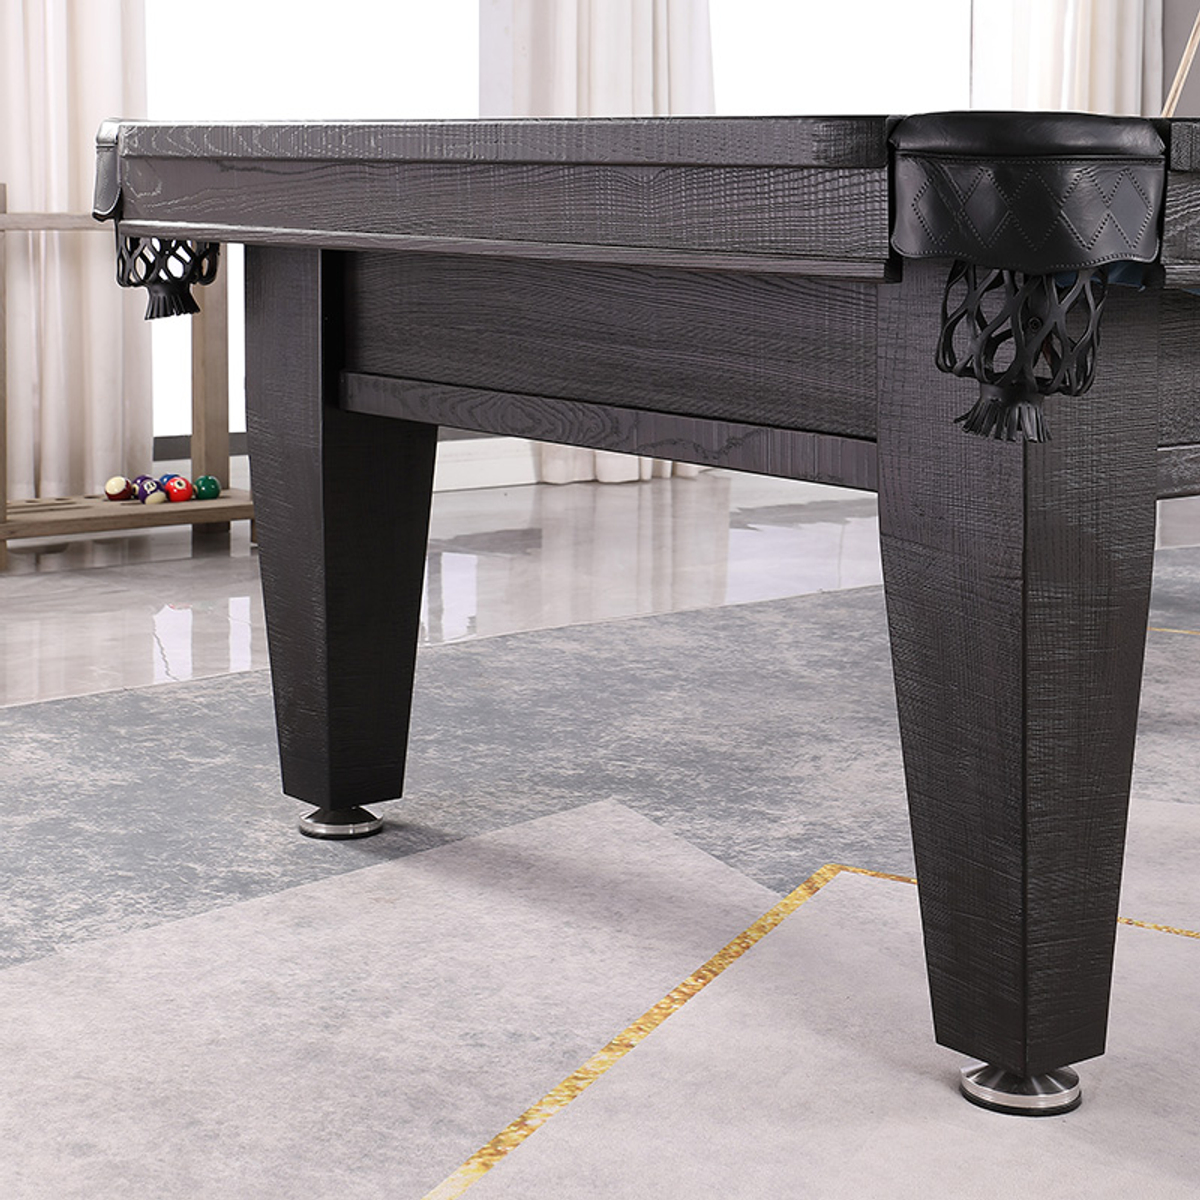 Top Table Lexor Pooltafel Imperator Competition Pro Black-Oak 9FT